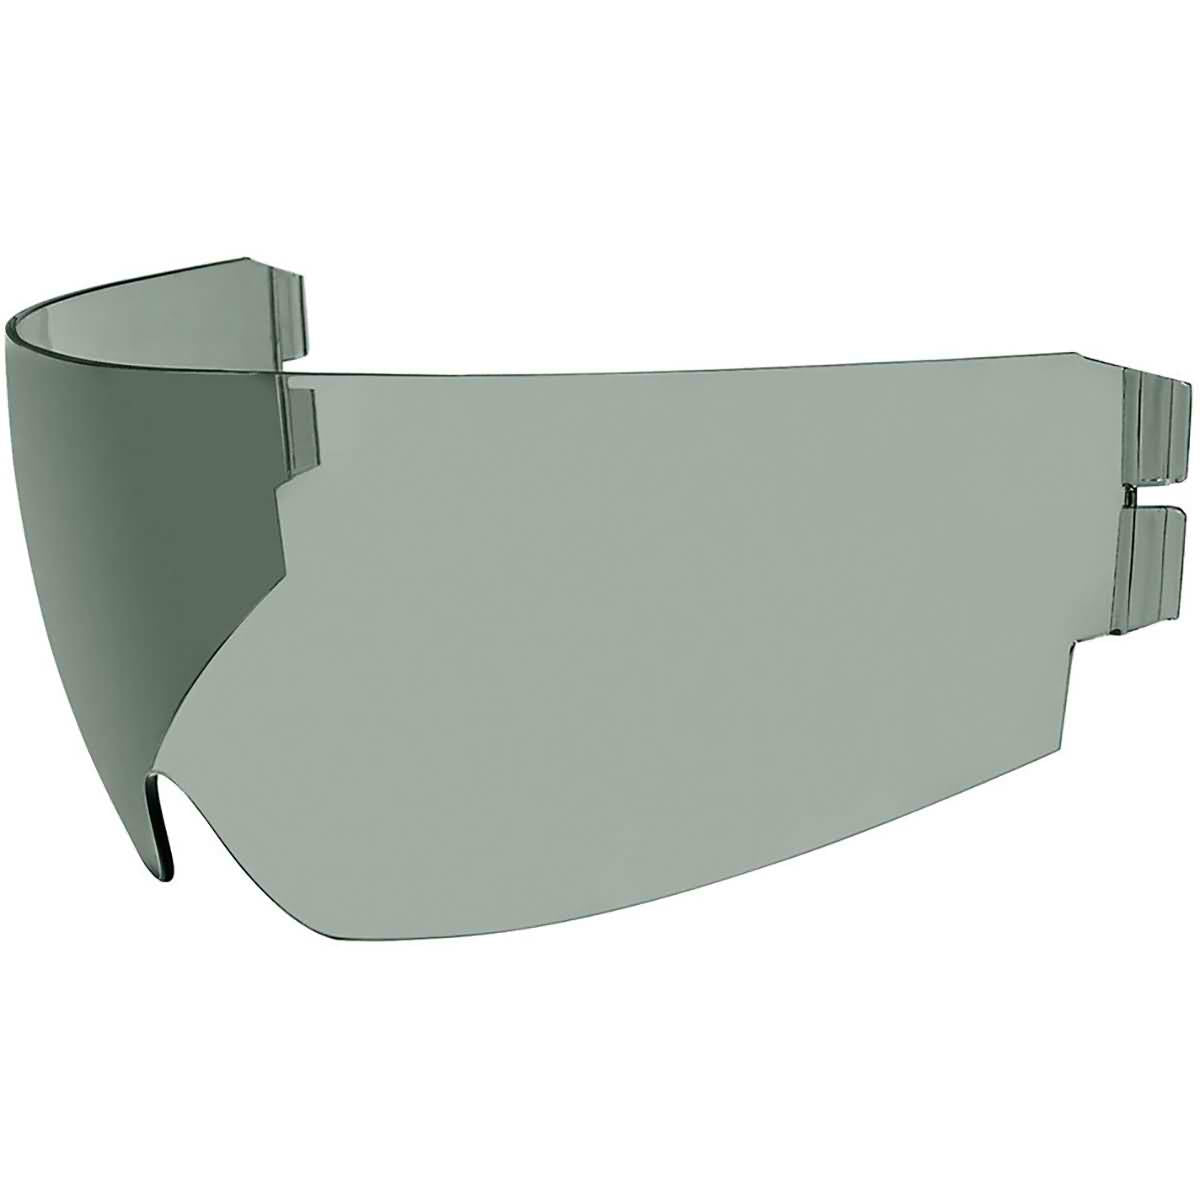 Icon Airflite/Airform Inner Face Shield Helmet Accessories-0130